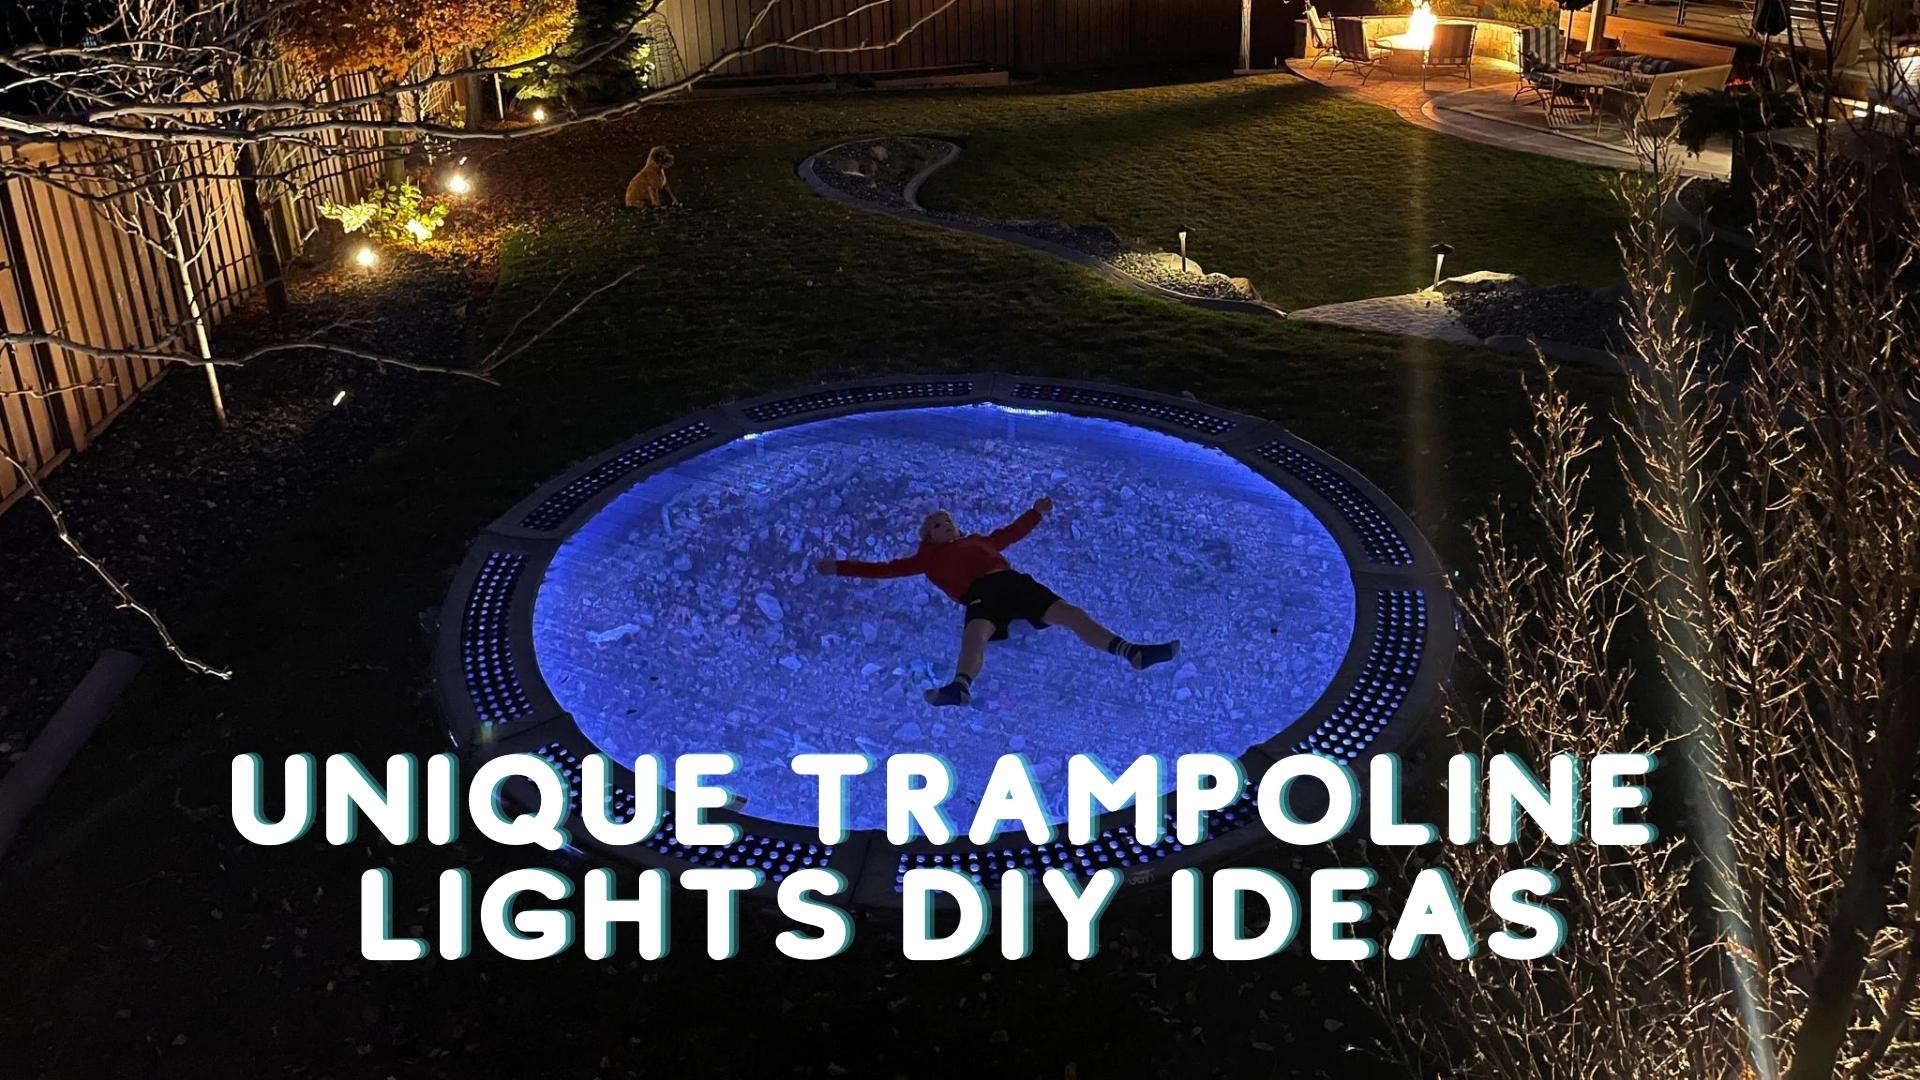 Trampoline Lights